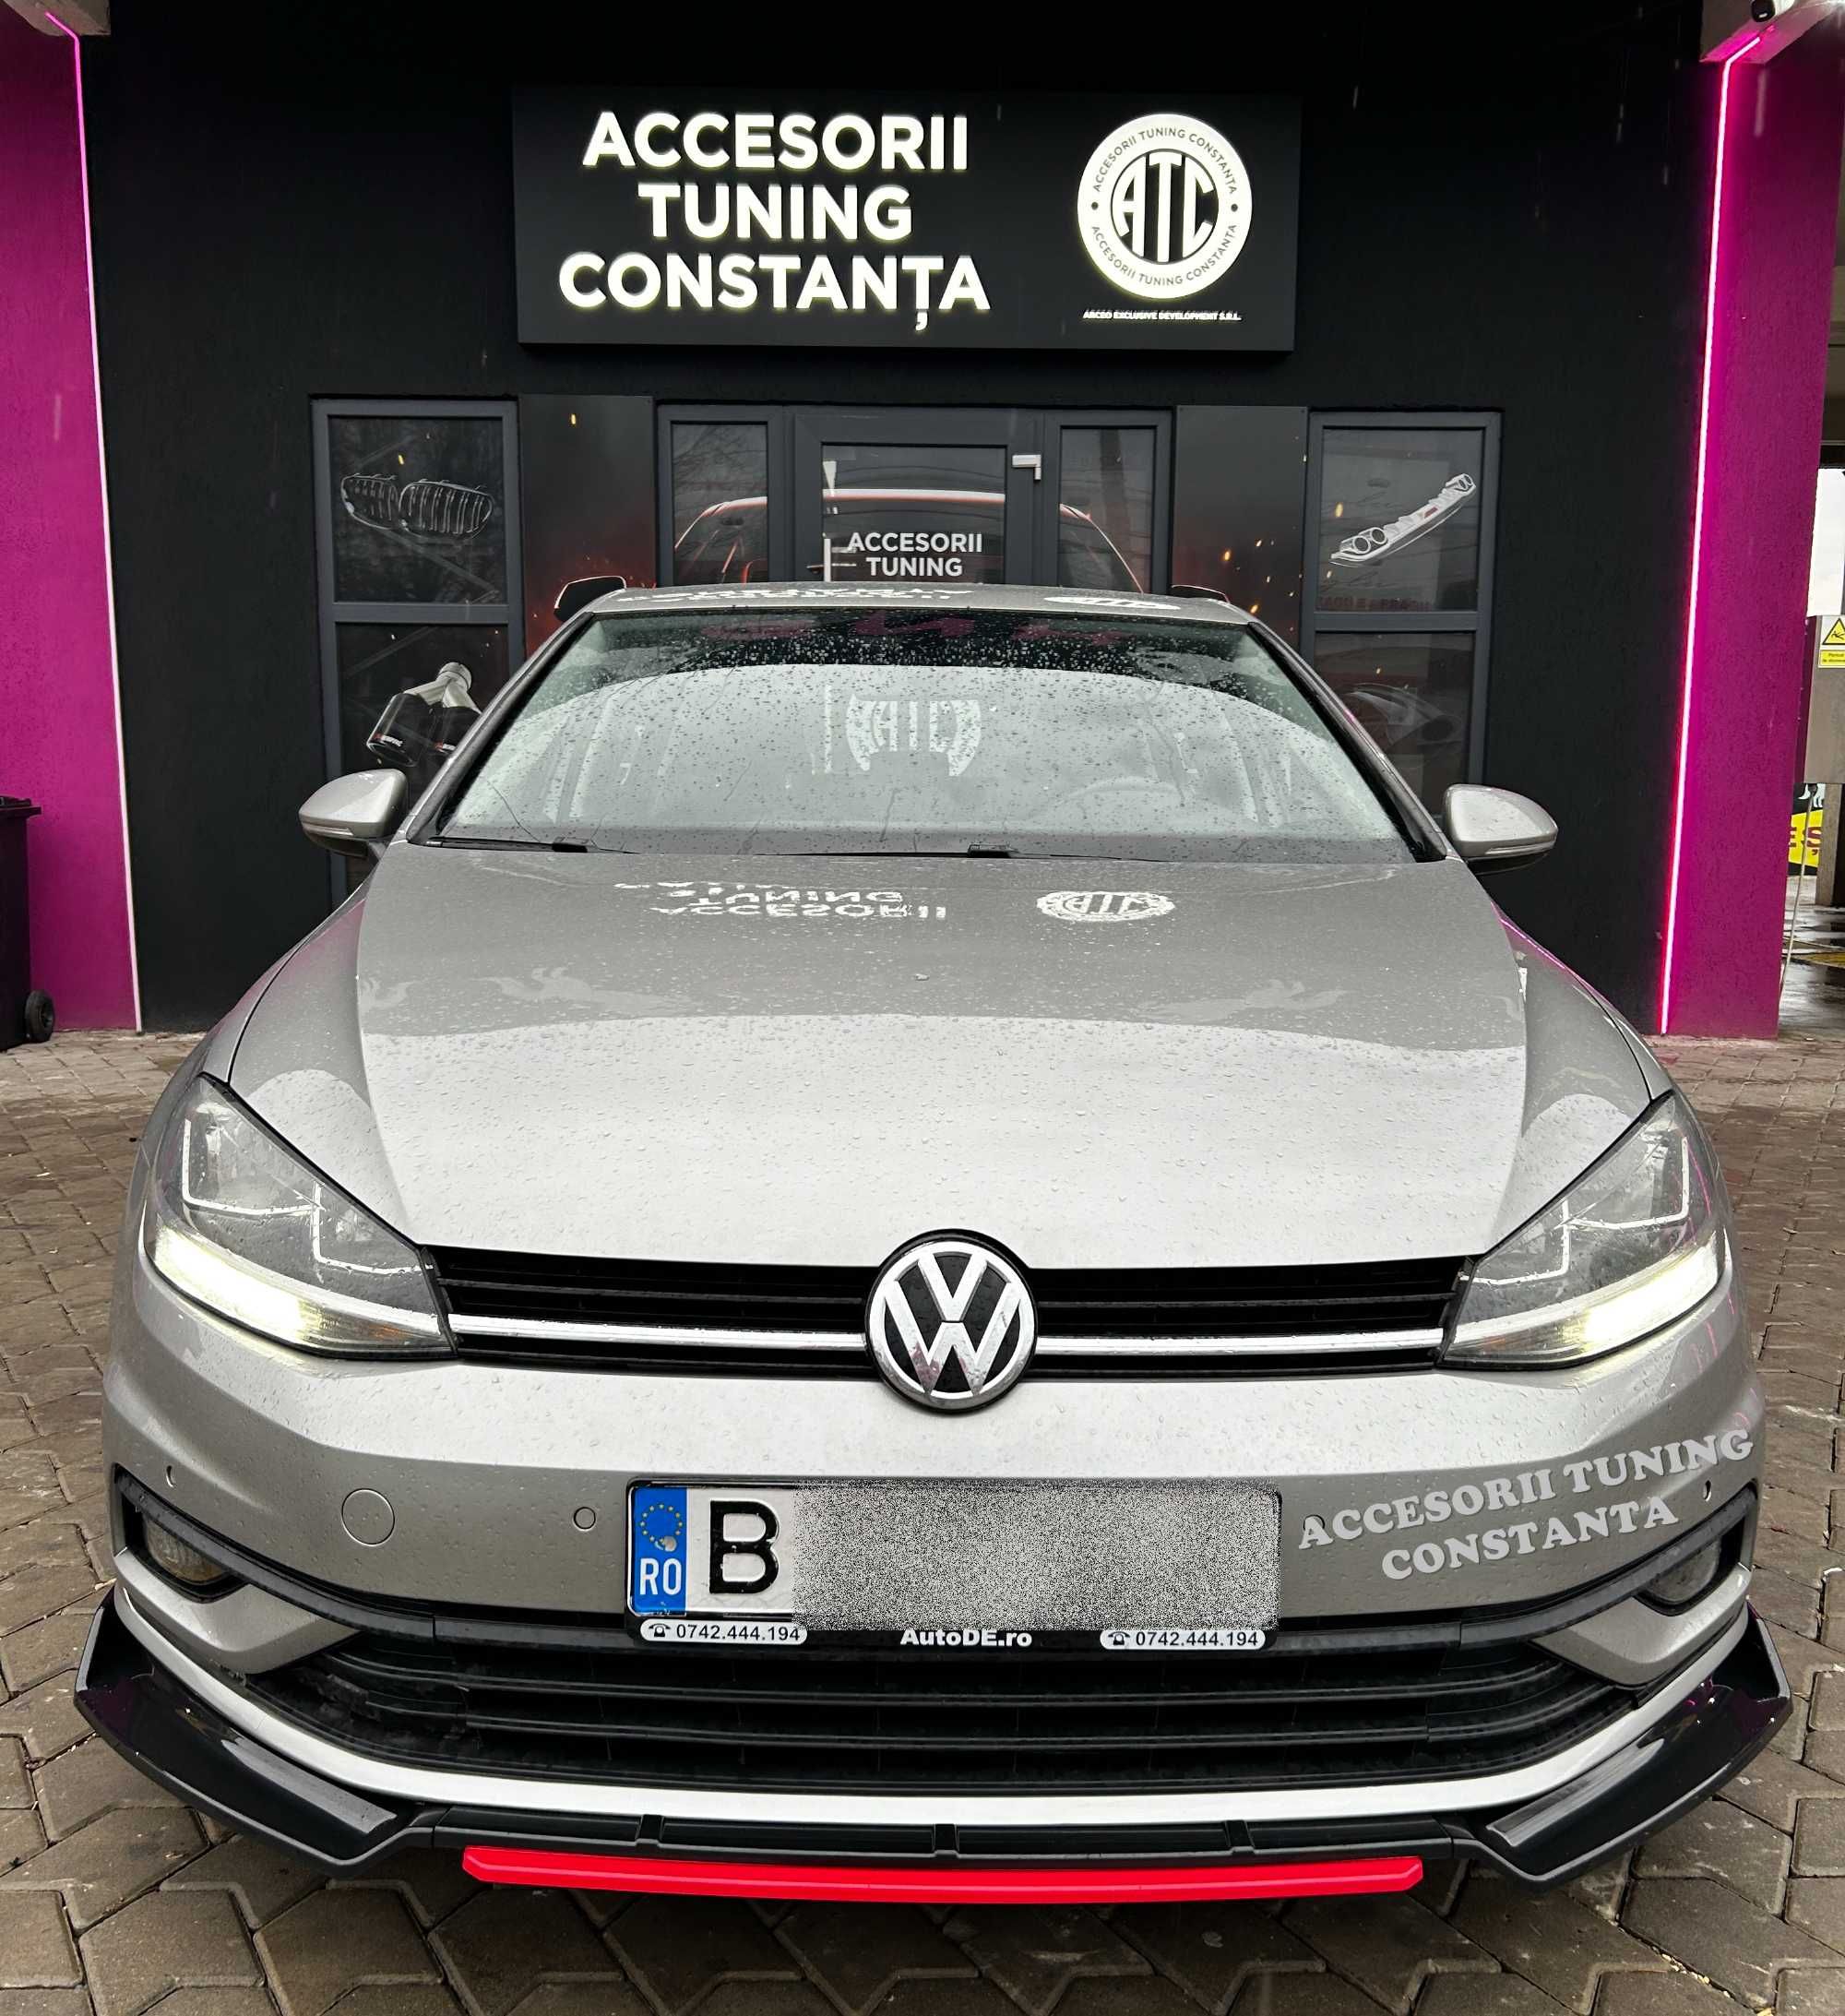 Prelungire Bara Fata - Lip Volkswagen Golf 7.5 Facelift - 4 PIESE